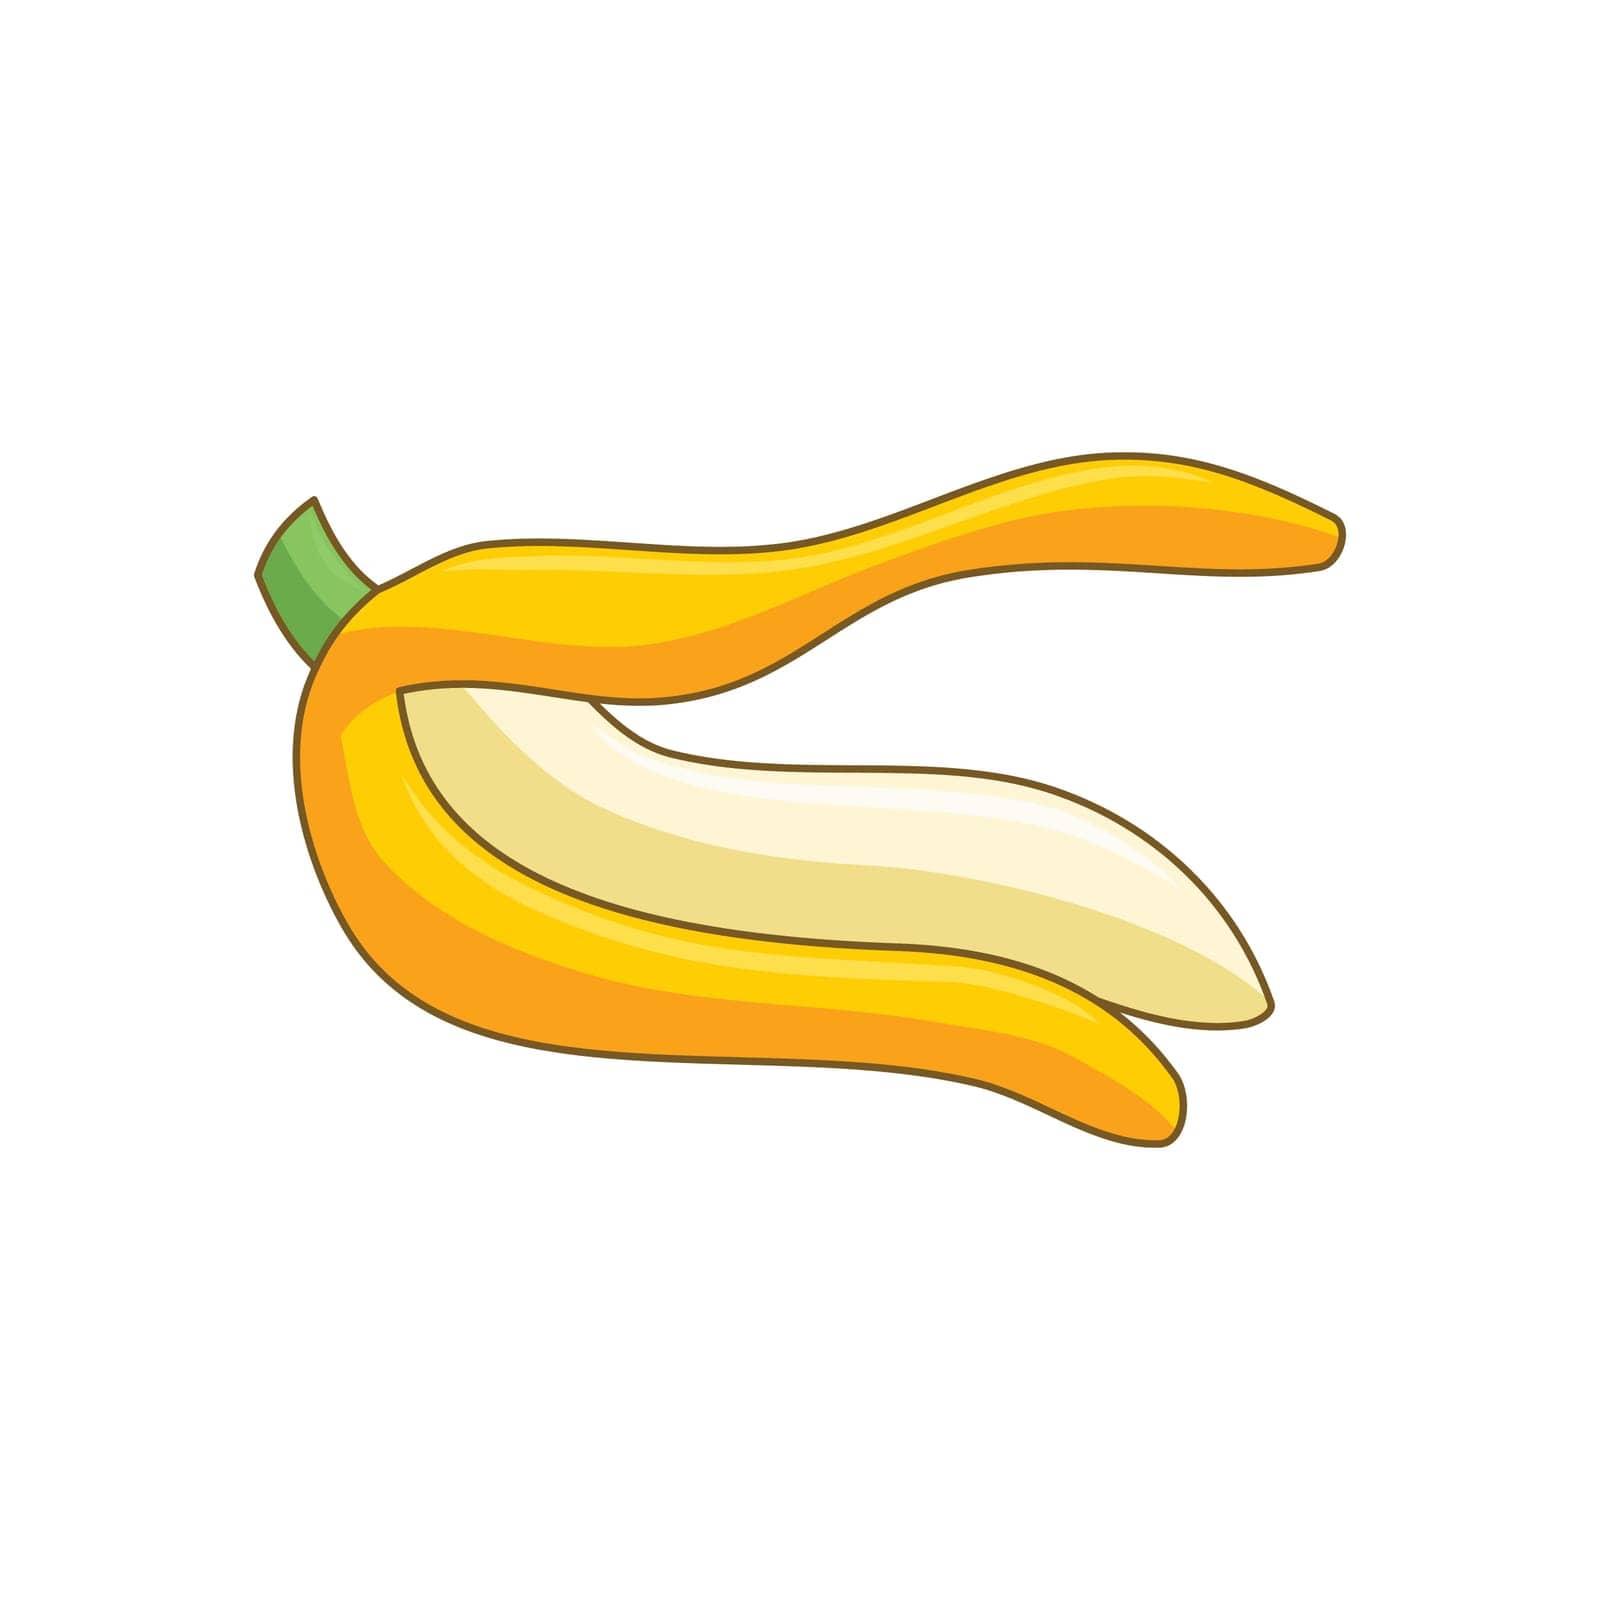 Cartoon bananas. Peel banana, yellow fruit and bunch of bananas. Tropical fruits, banana snack or vegetarian nutrition. Isolated vector illustration icons set 